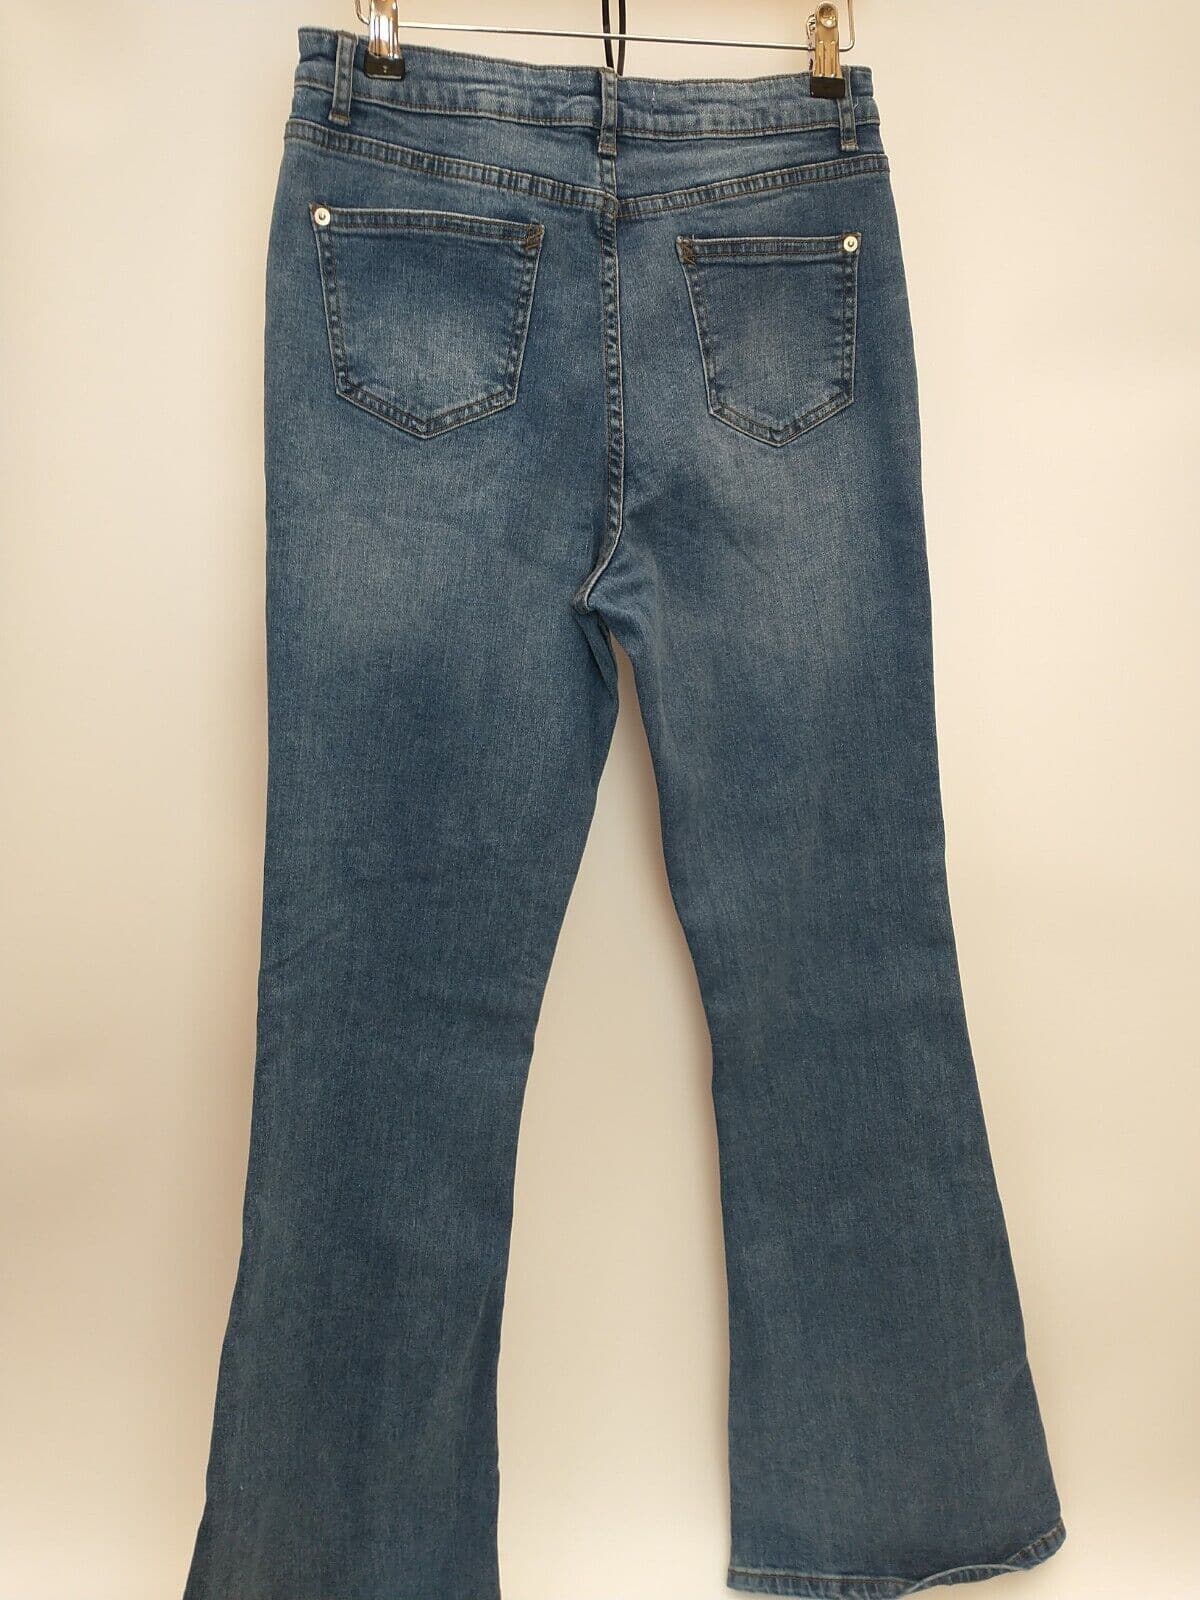 Missguided Slim Fit Flared Jeans Size UK 8 **** V35